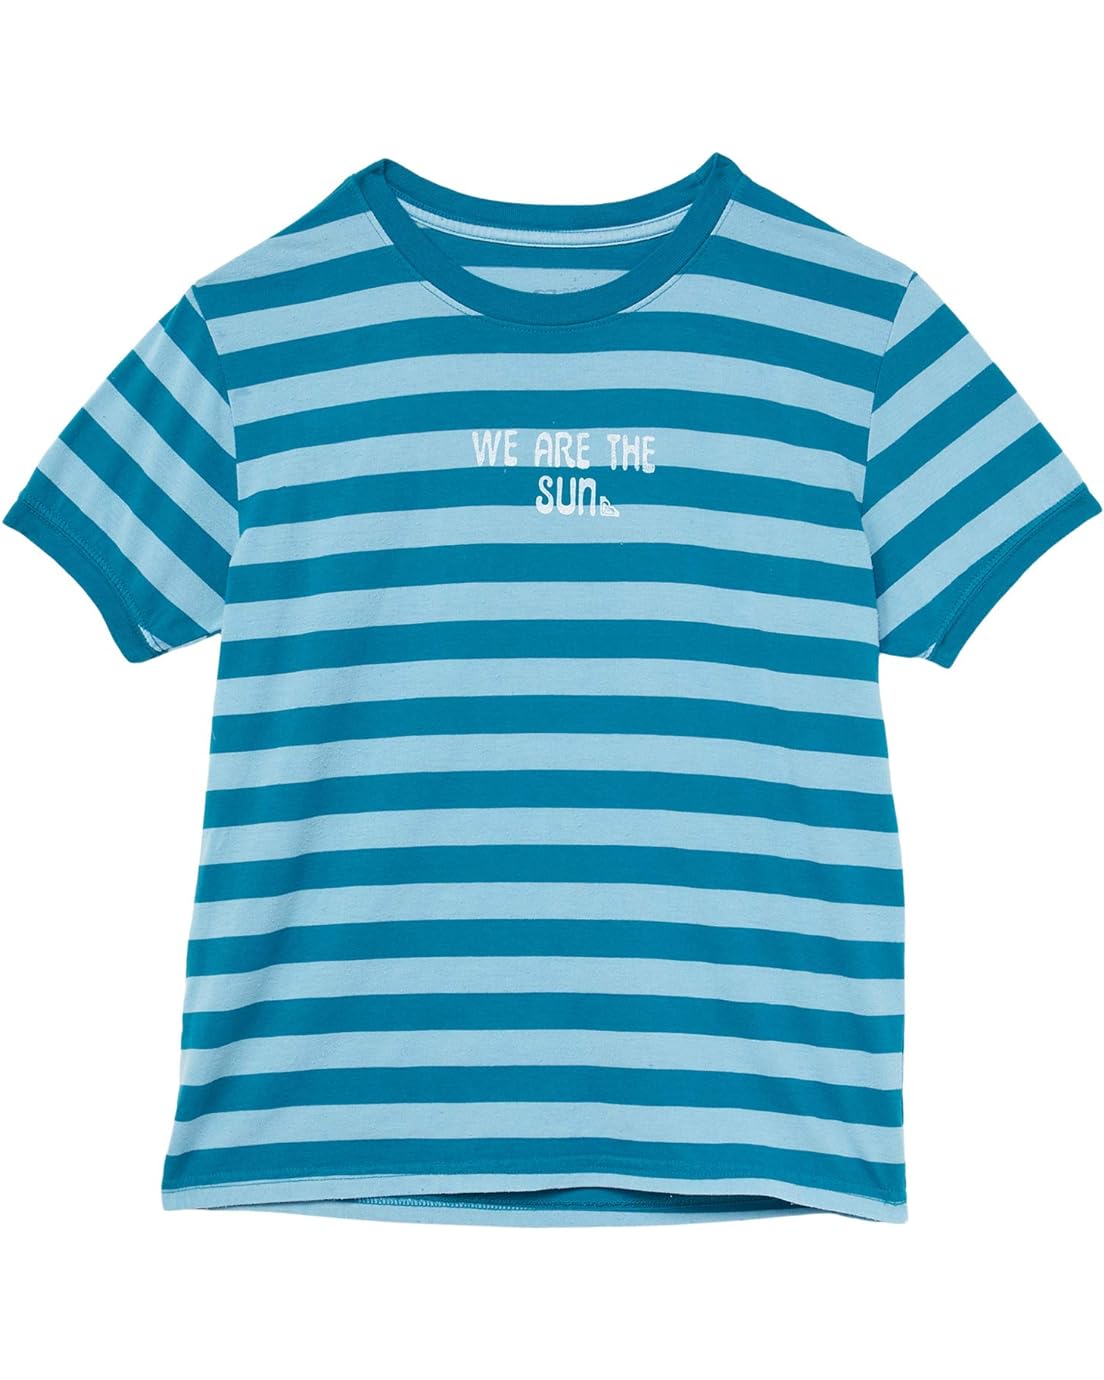 Roxy Kids Who We Are T-Shirt (Little Kidsu002FBig Kids)